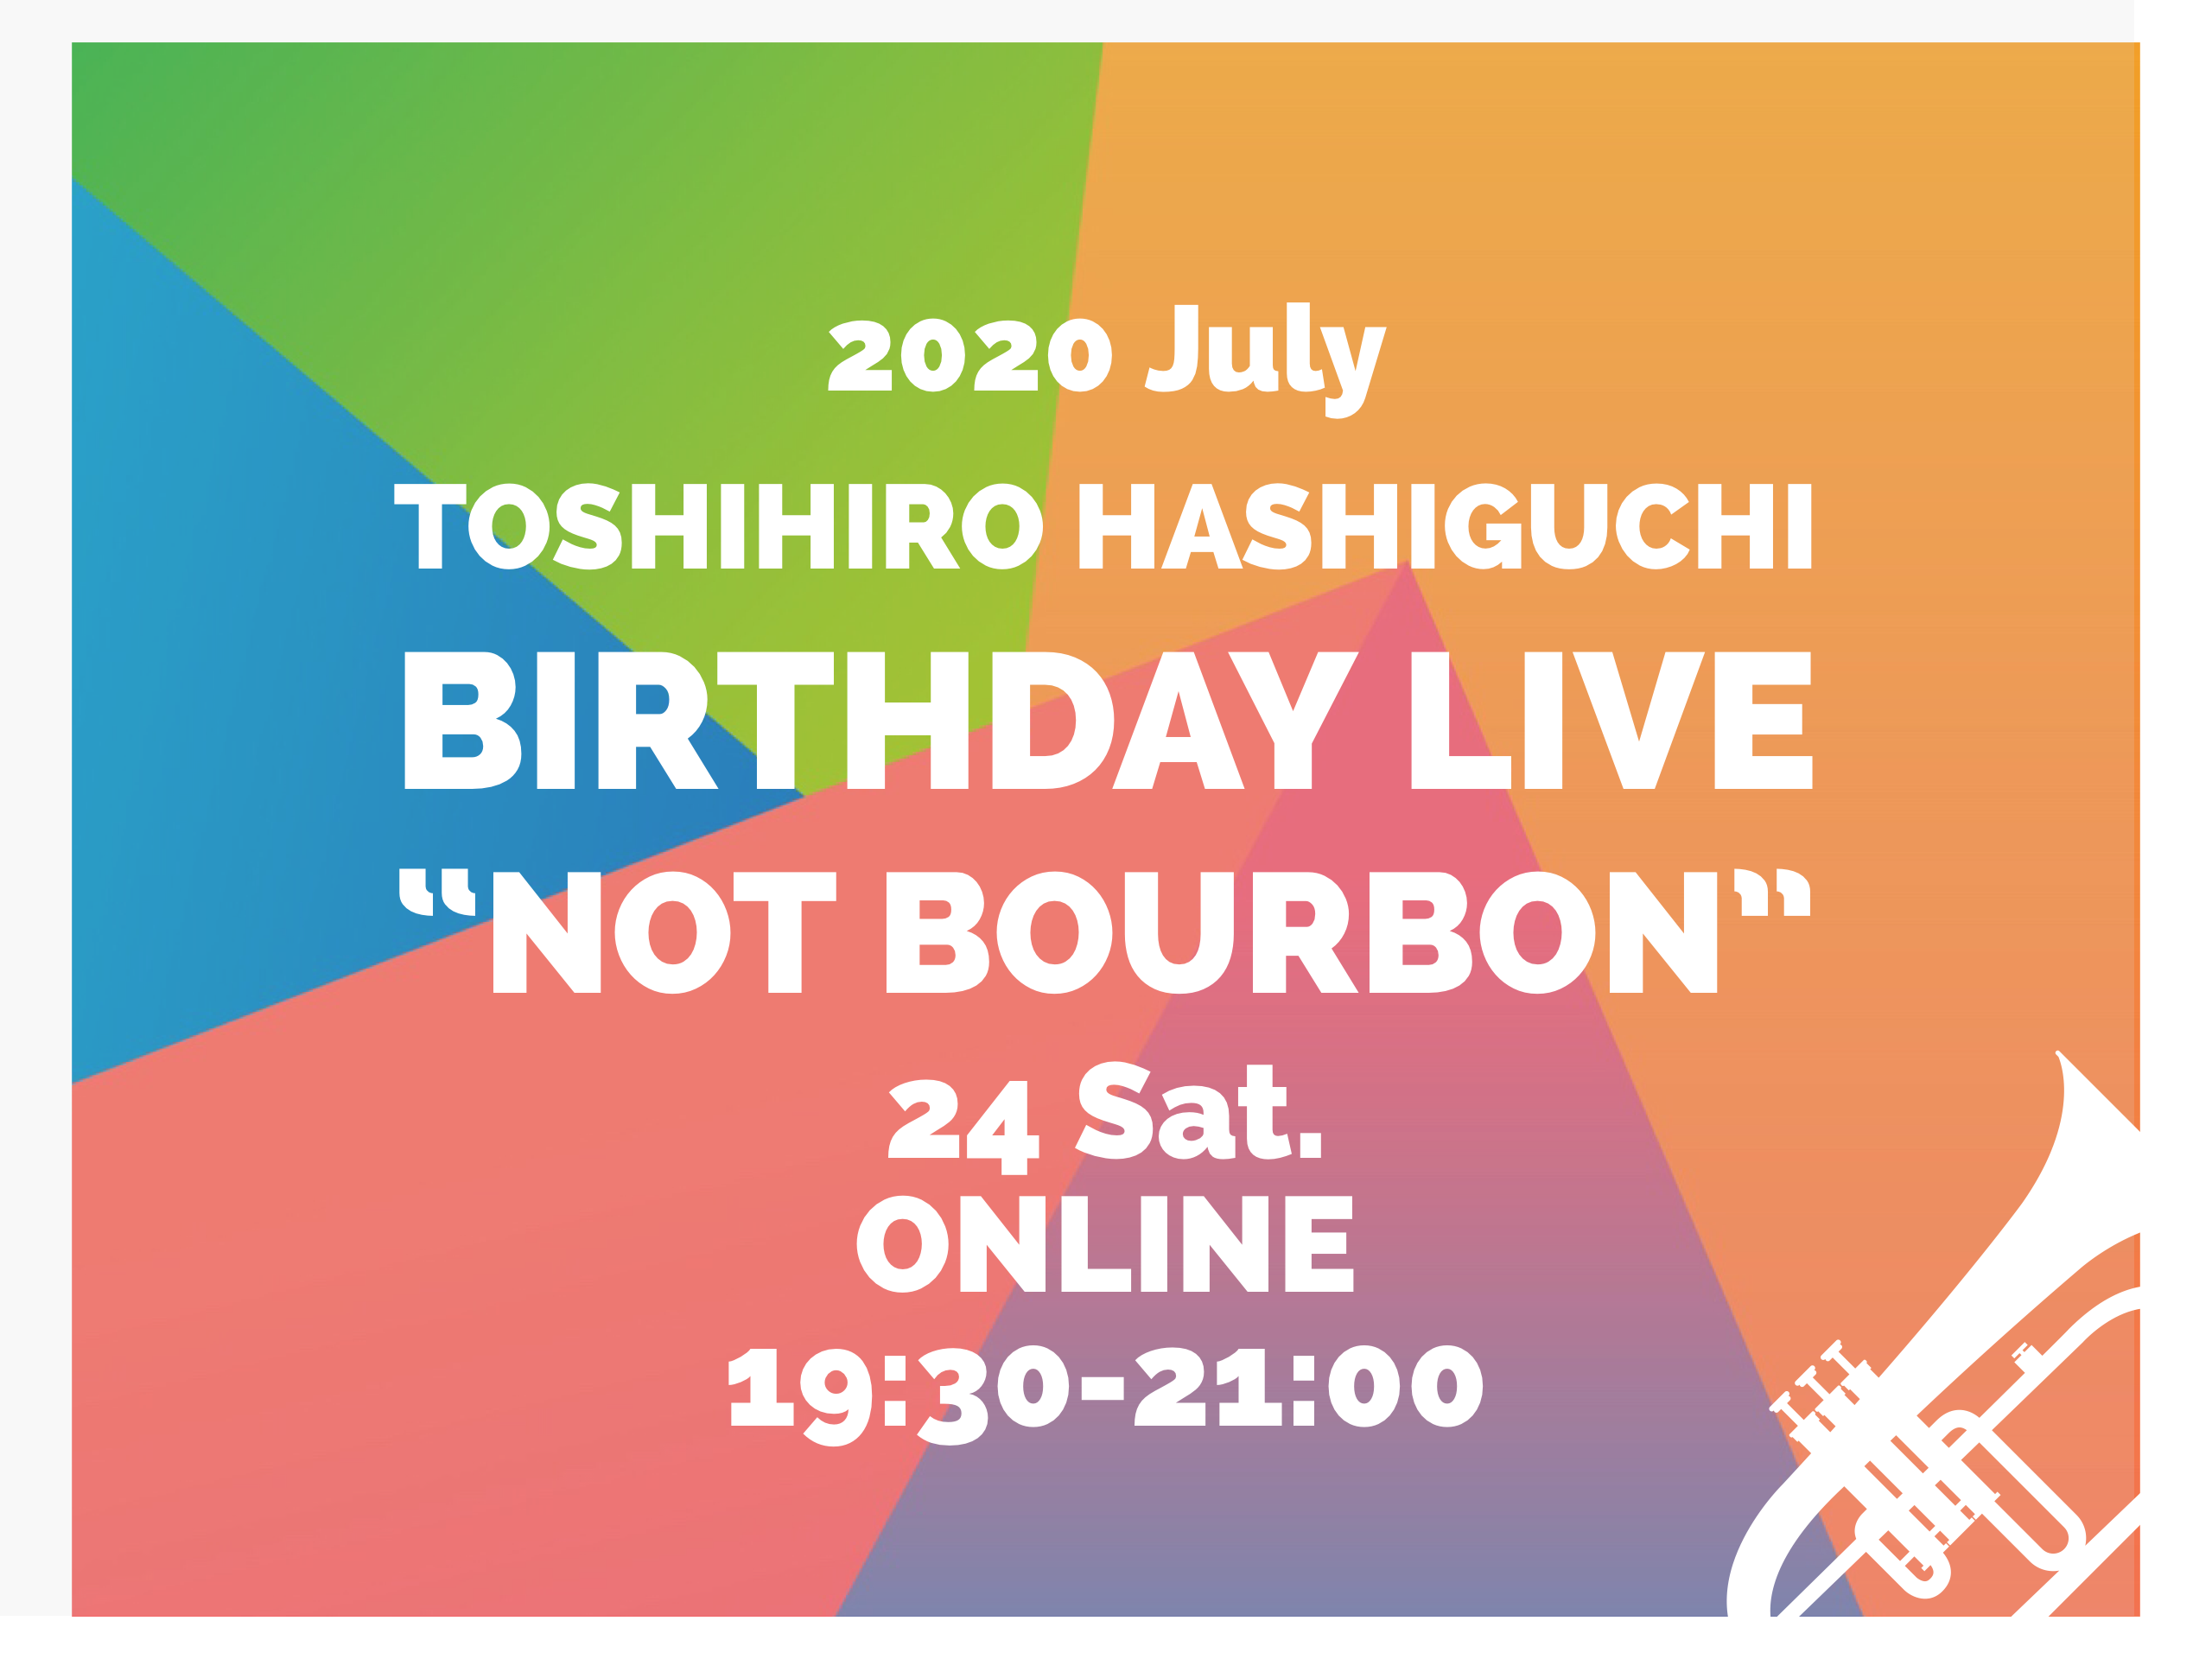 BIRTHDAY LIVE 2020 online